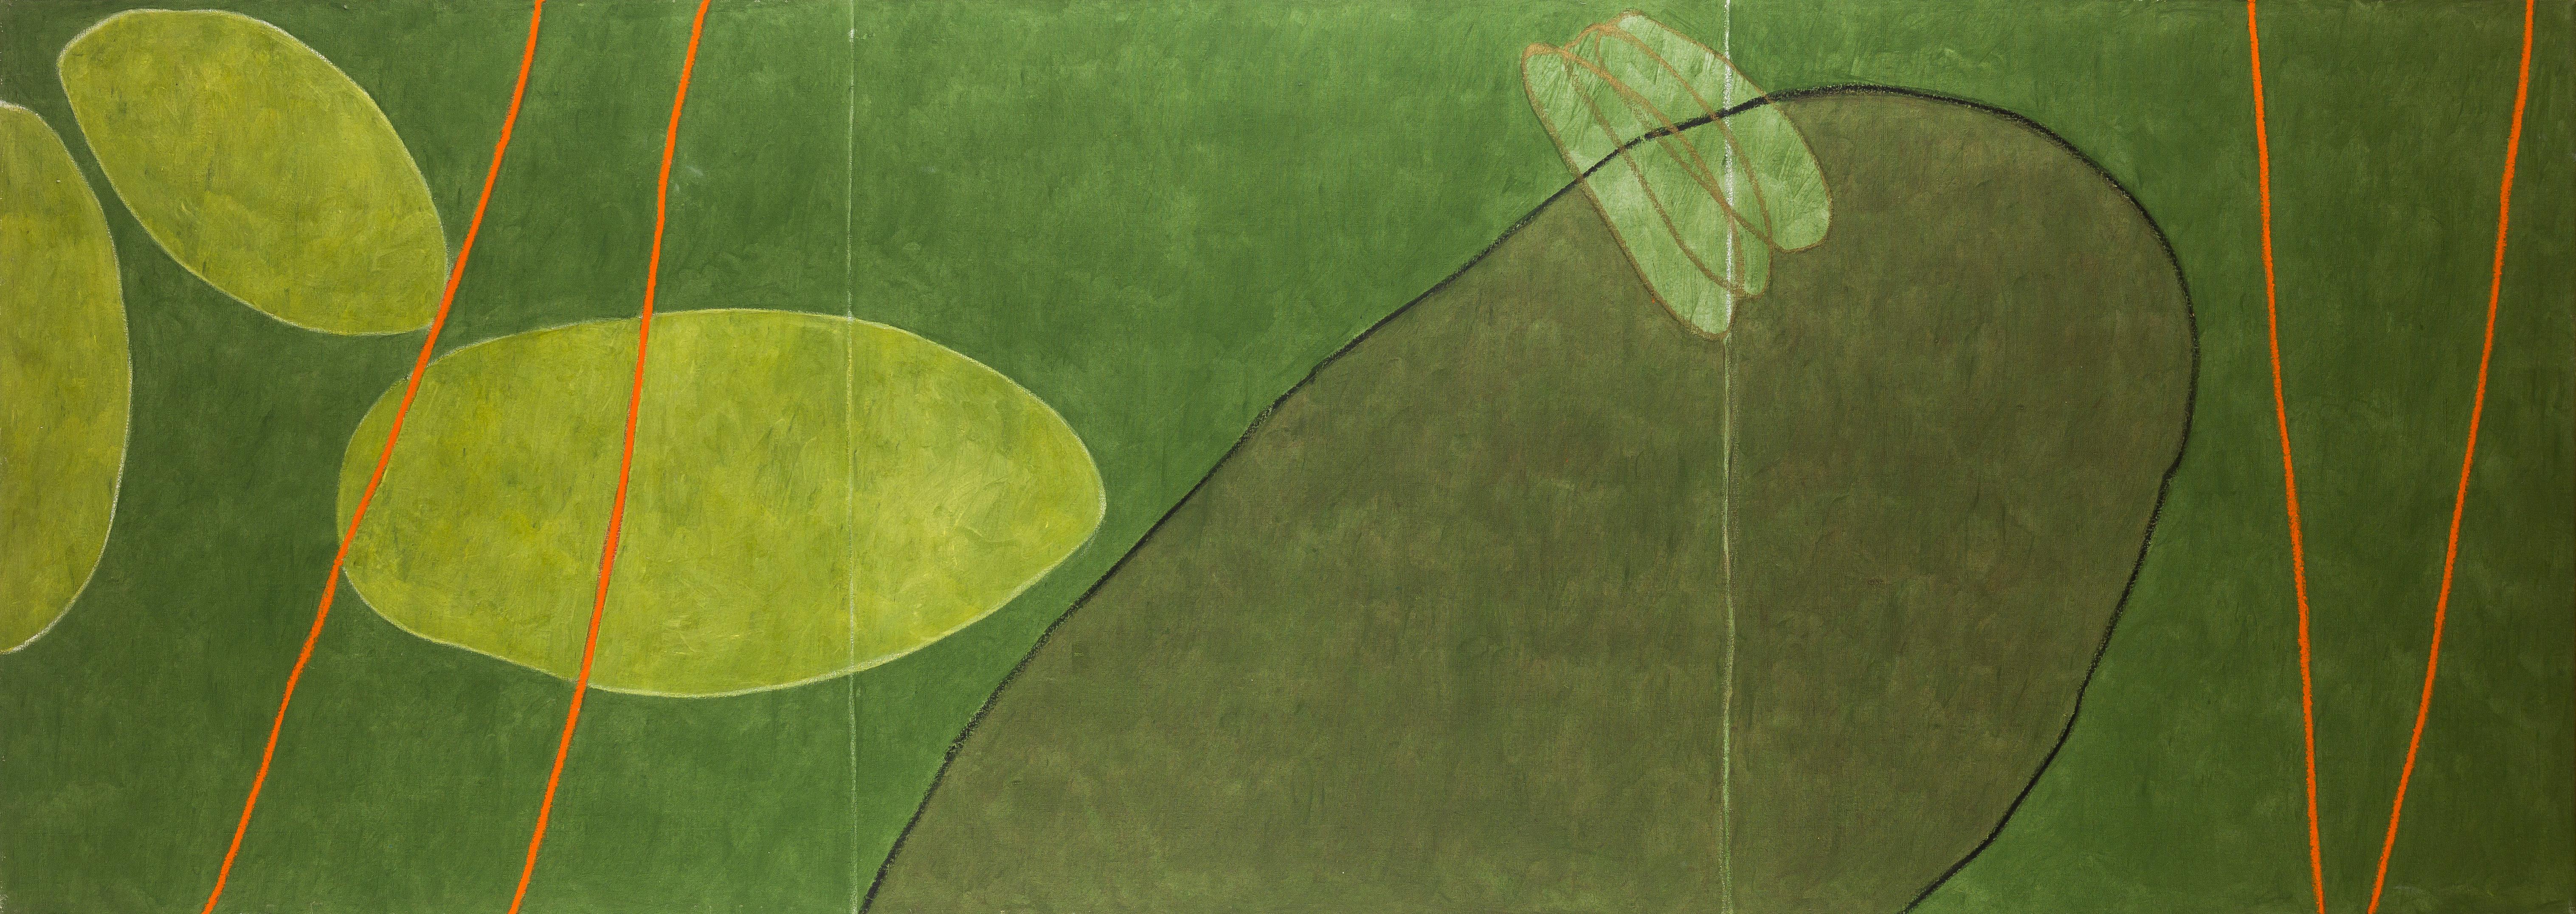 Mario Velez Abstract Painting - Espacios Vulnerables: Jardin horizontal con gran senda oblicua 